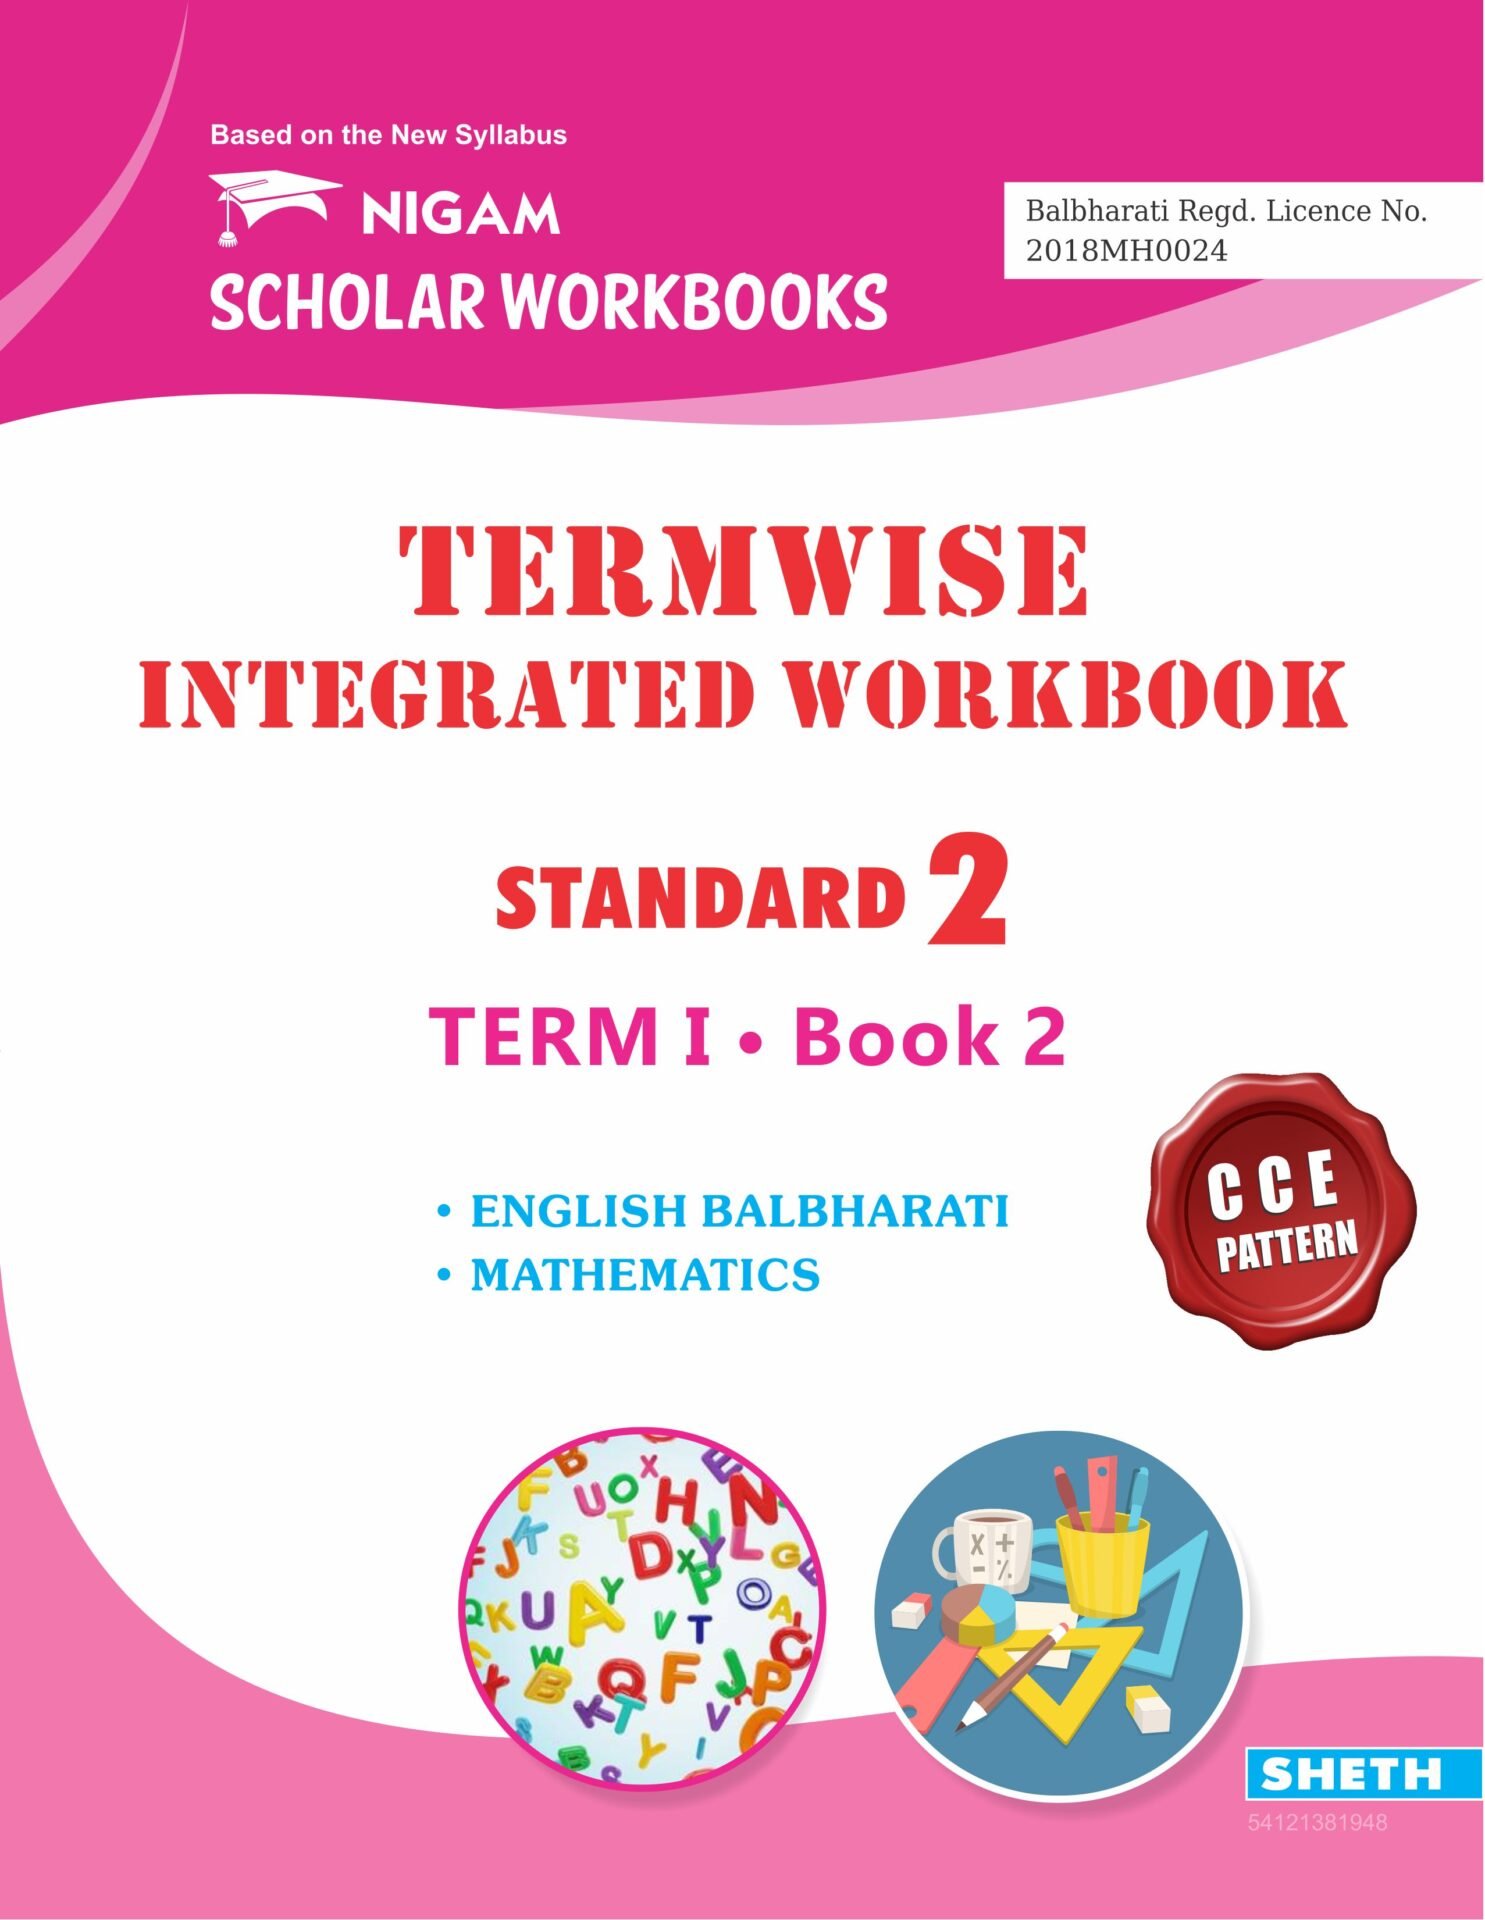 CCE Pattern Nigam Scholar Workbooks Termwise Integrated Workbook English Balbharati and Mathematics Standard 2 Term 1 Book 2 1